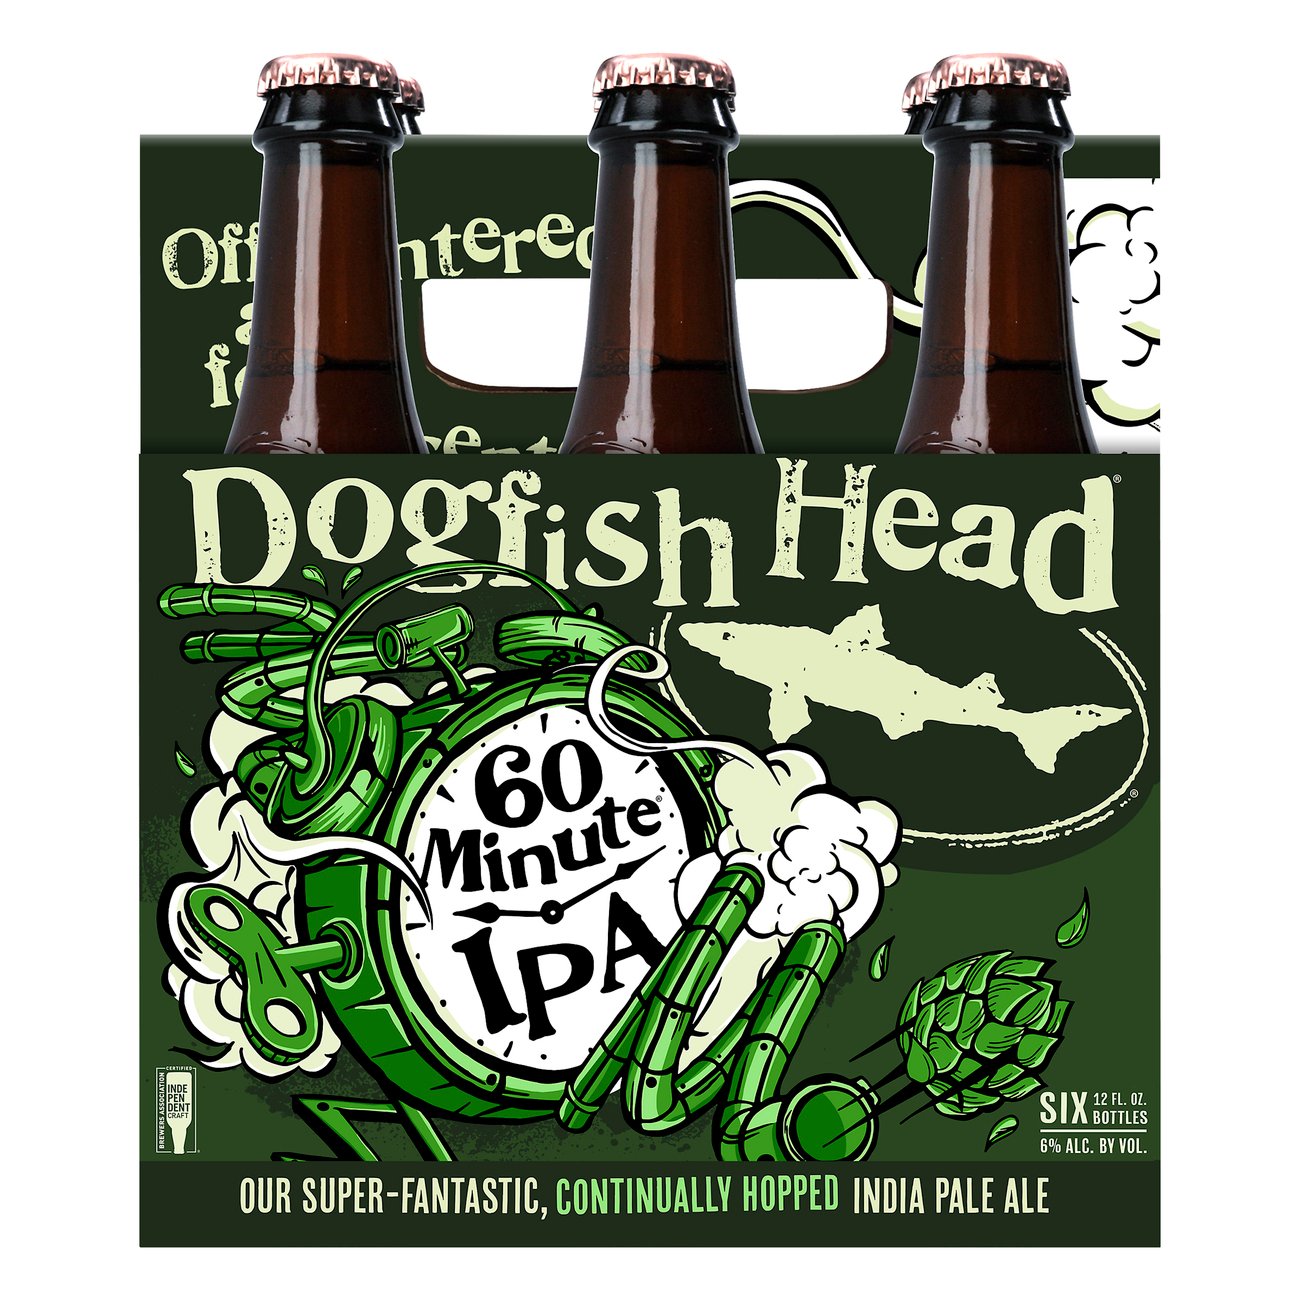 dogfish head logo